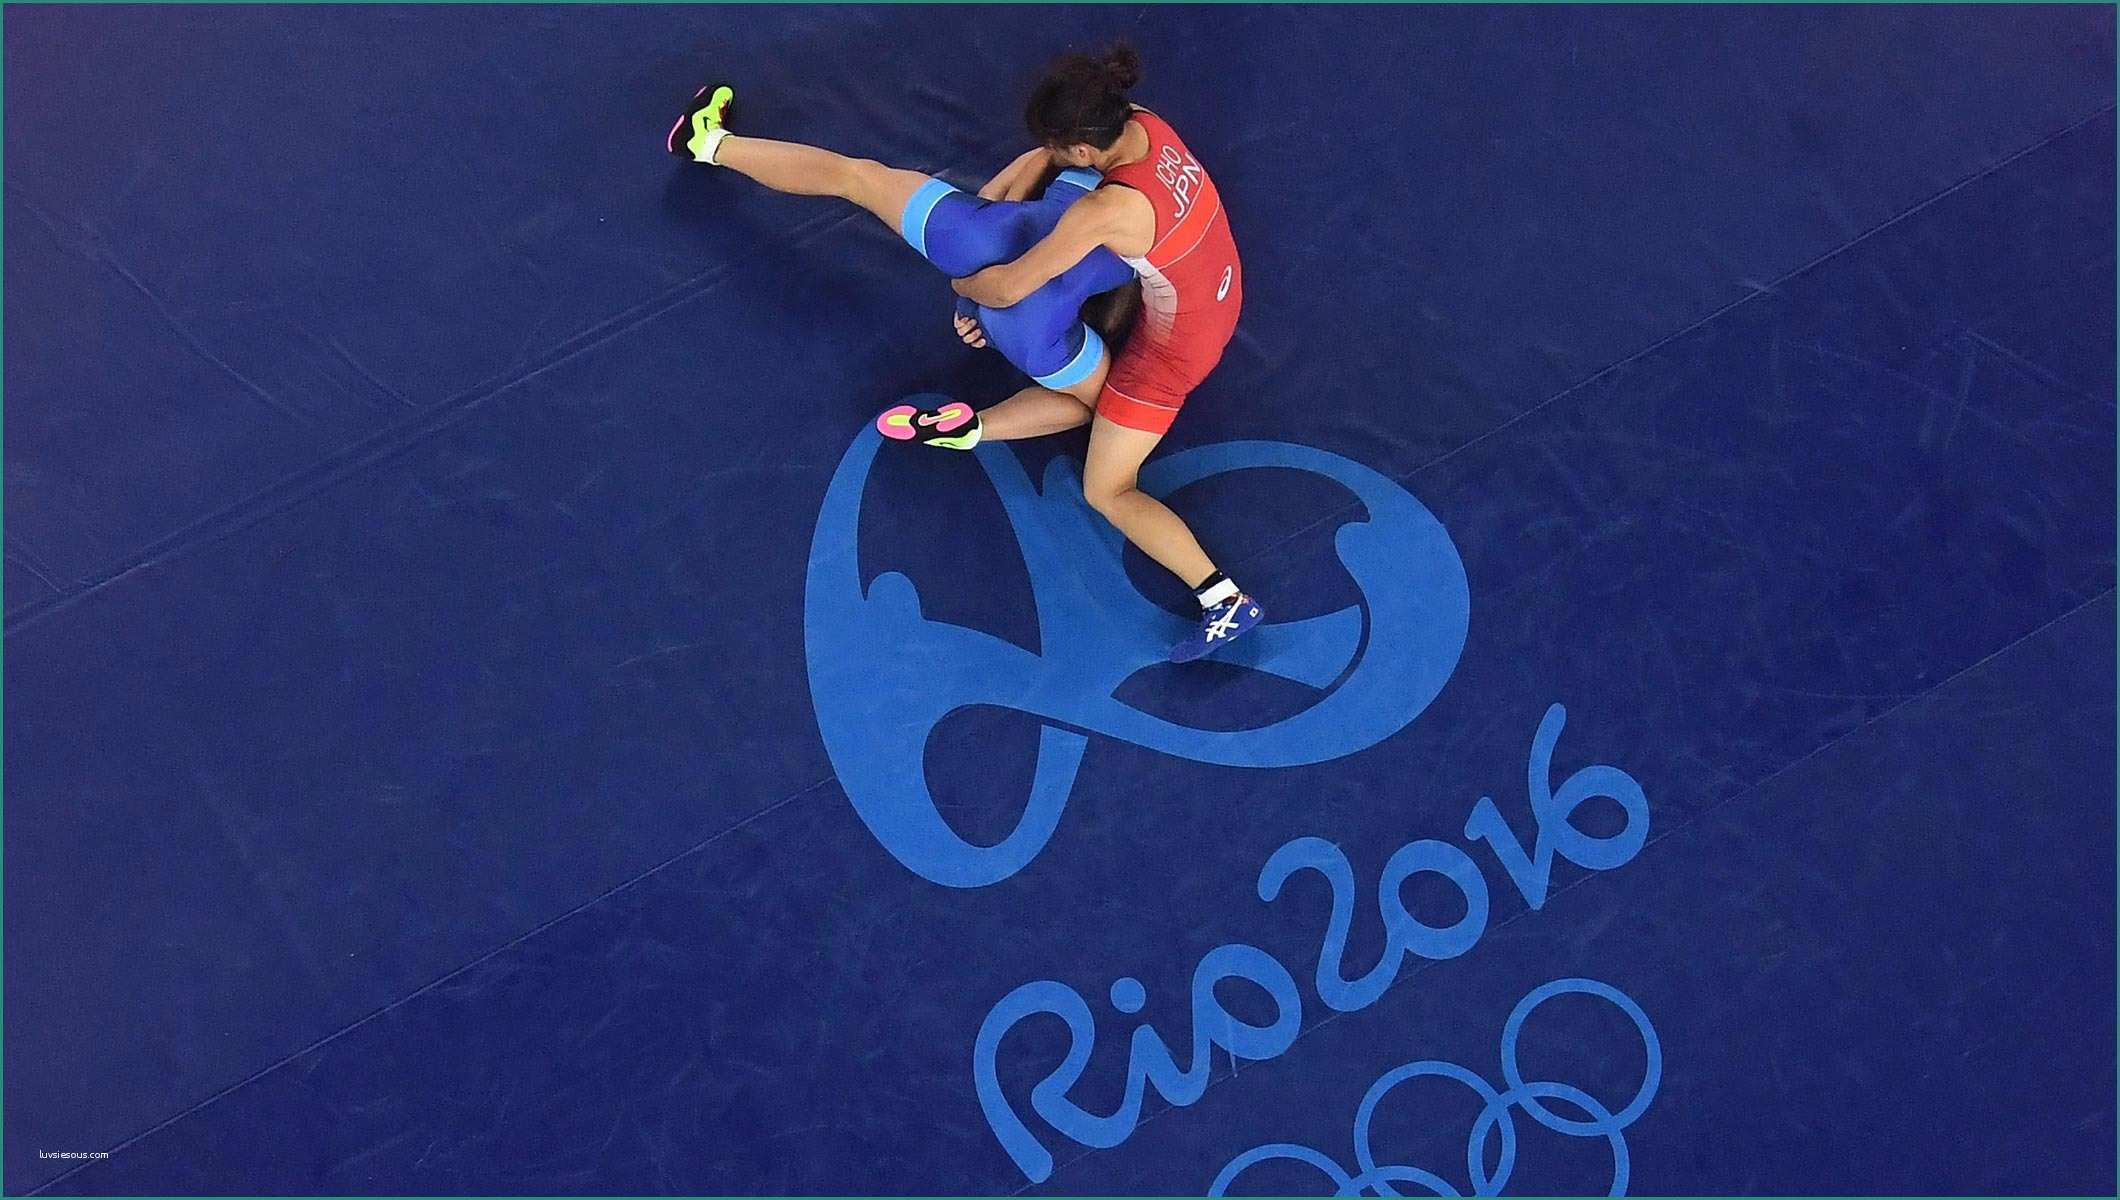 Prova Kia Rio E Rio 2016 Summer Olympics Results and Video Highlights